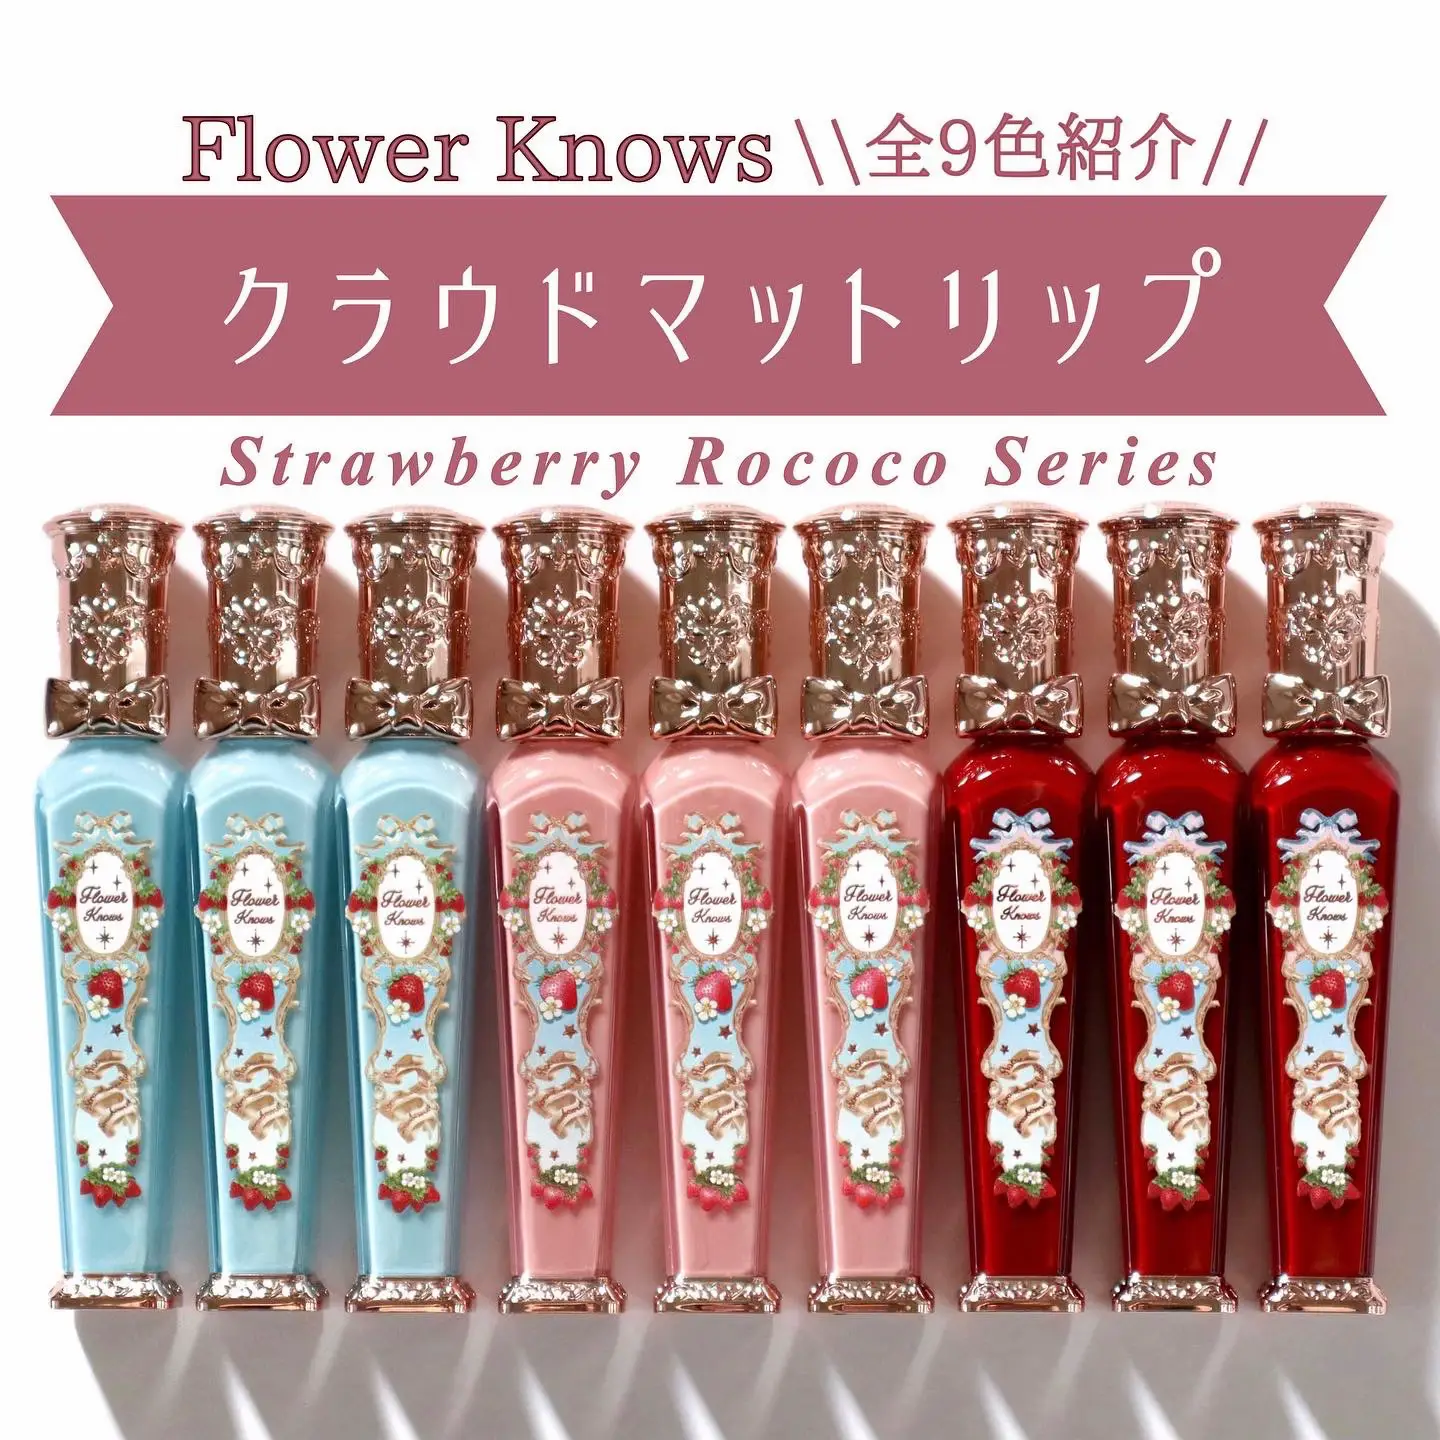 flower knows unicorn series liquid lipstick